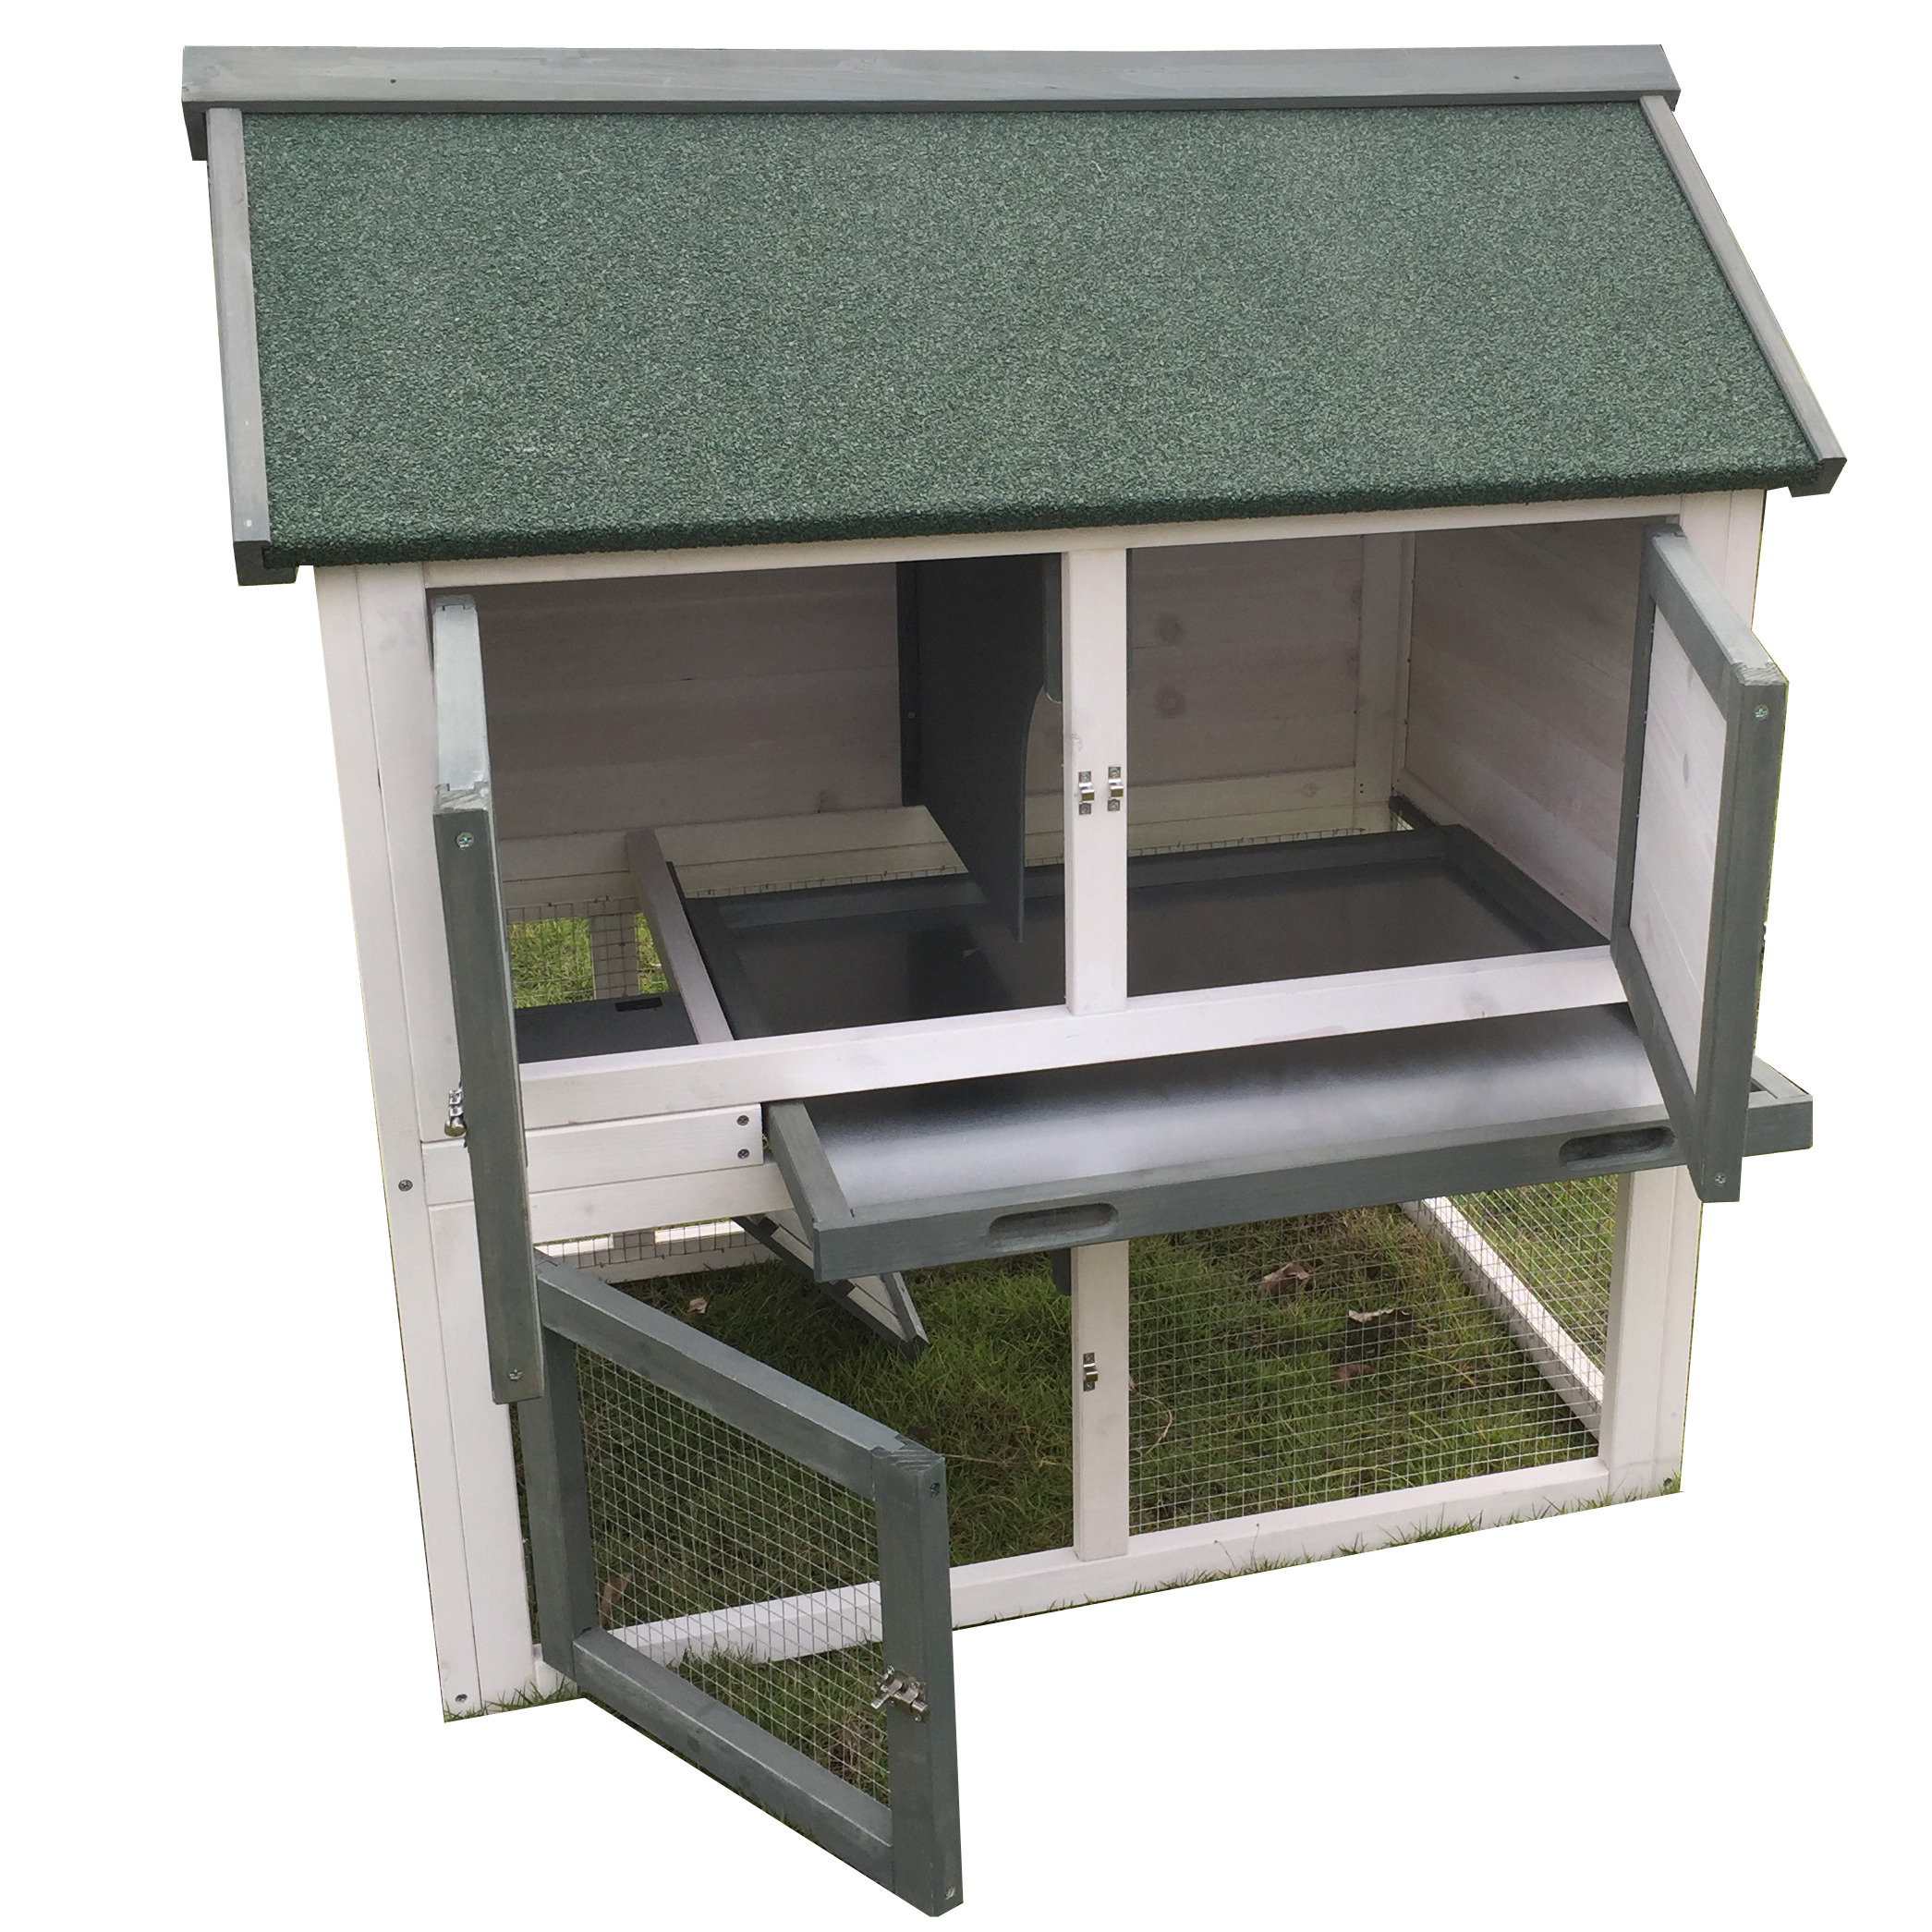 Professional Design Layer Bitumen Roof Rabbit Breeding Cages wood outdoor